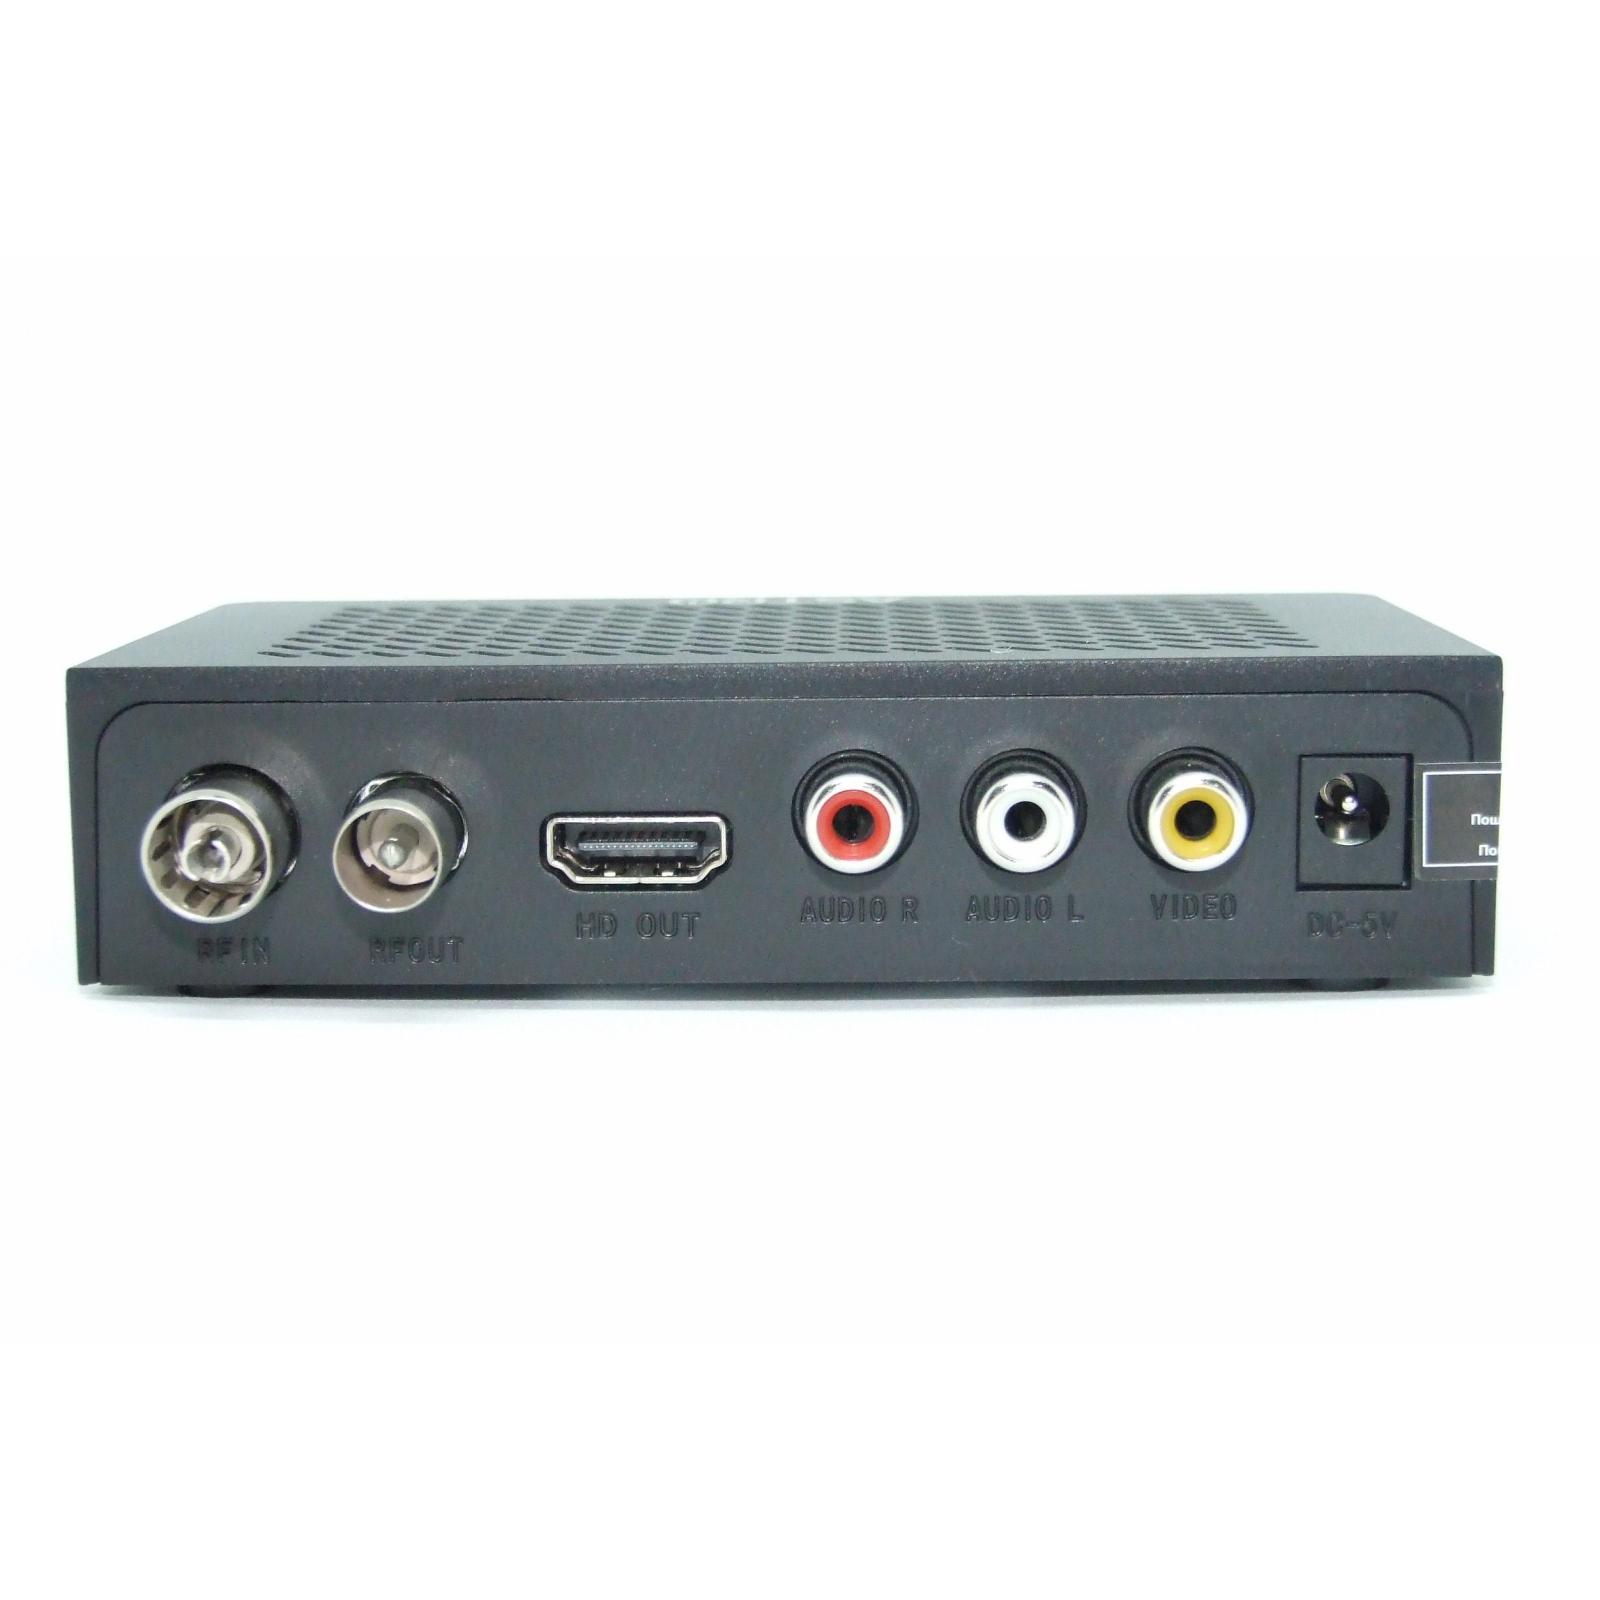 ТВ тюнер Astro DVB-T, DVB-T2, + USB-port (TA-23) изображение 2